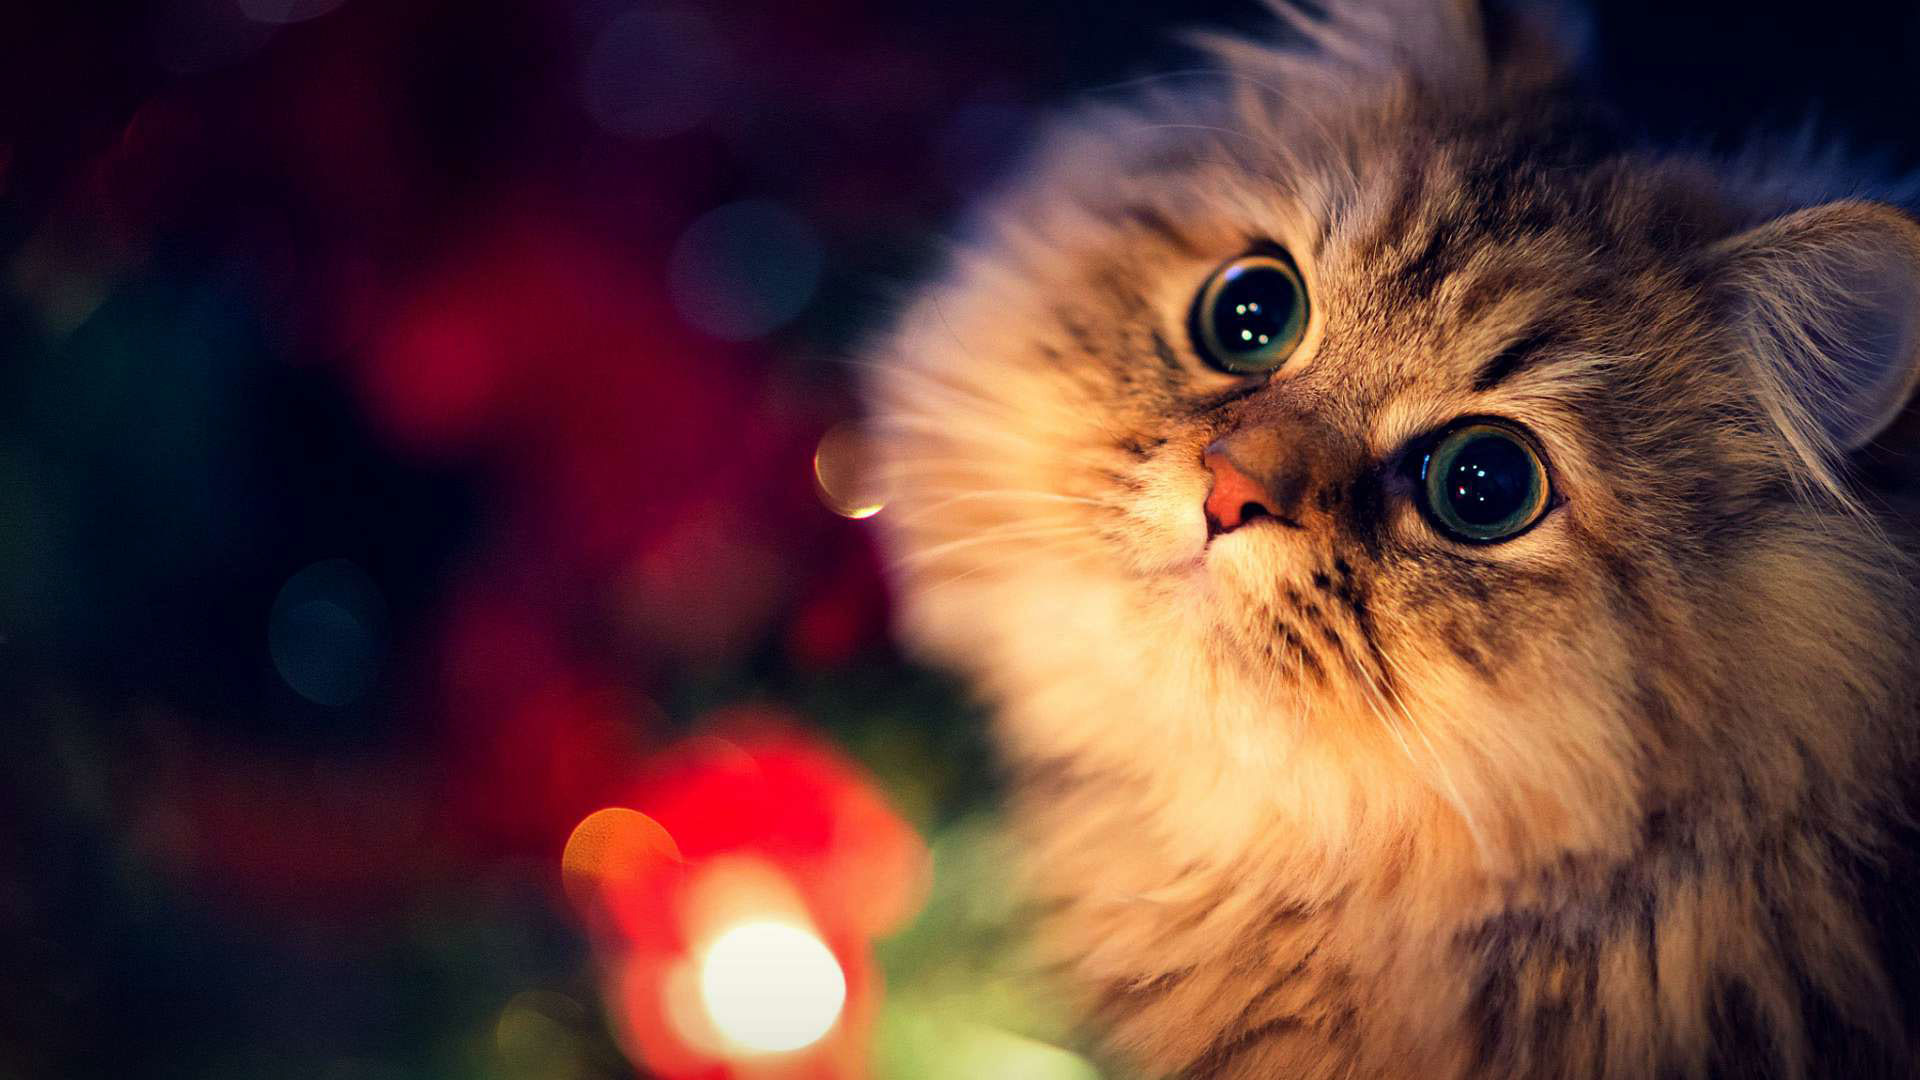 hd pics photos stunning cute cat christmas lights beautiful hd quality desktop  background wallpaper